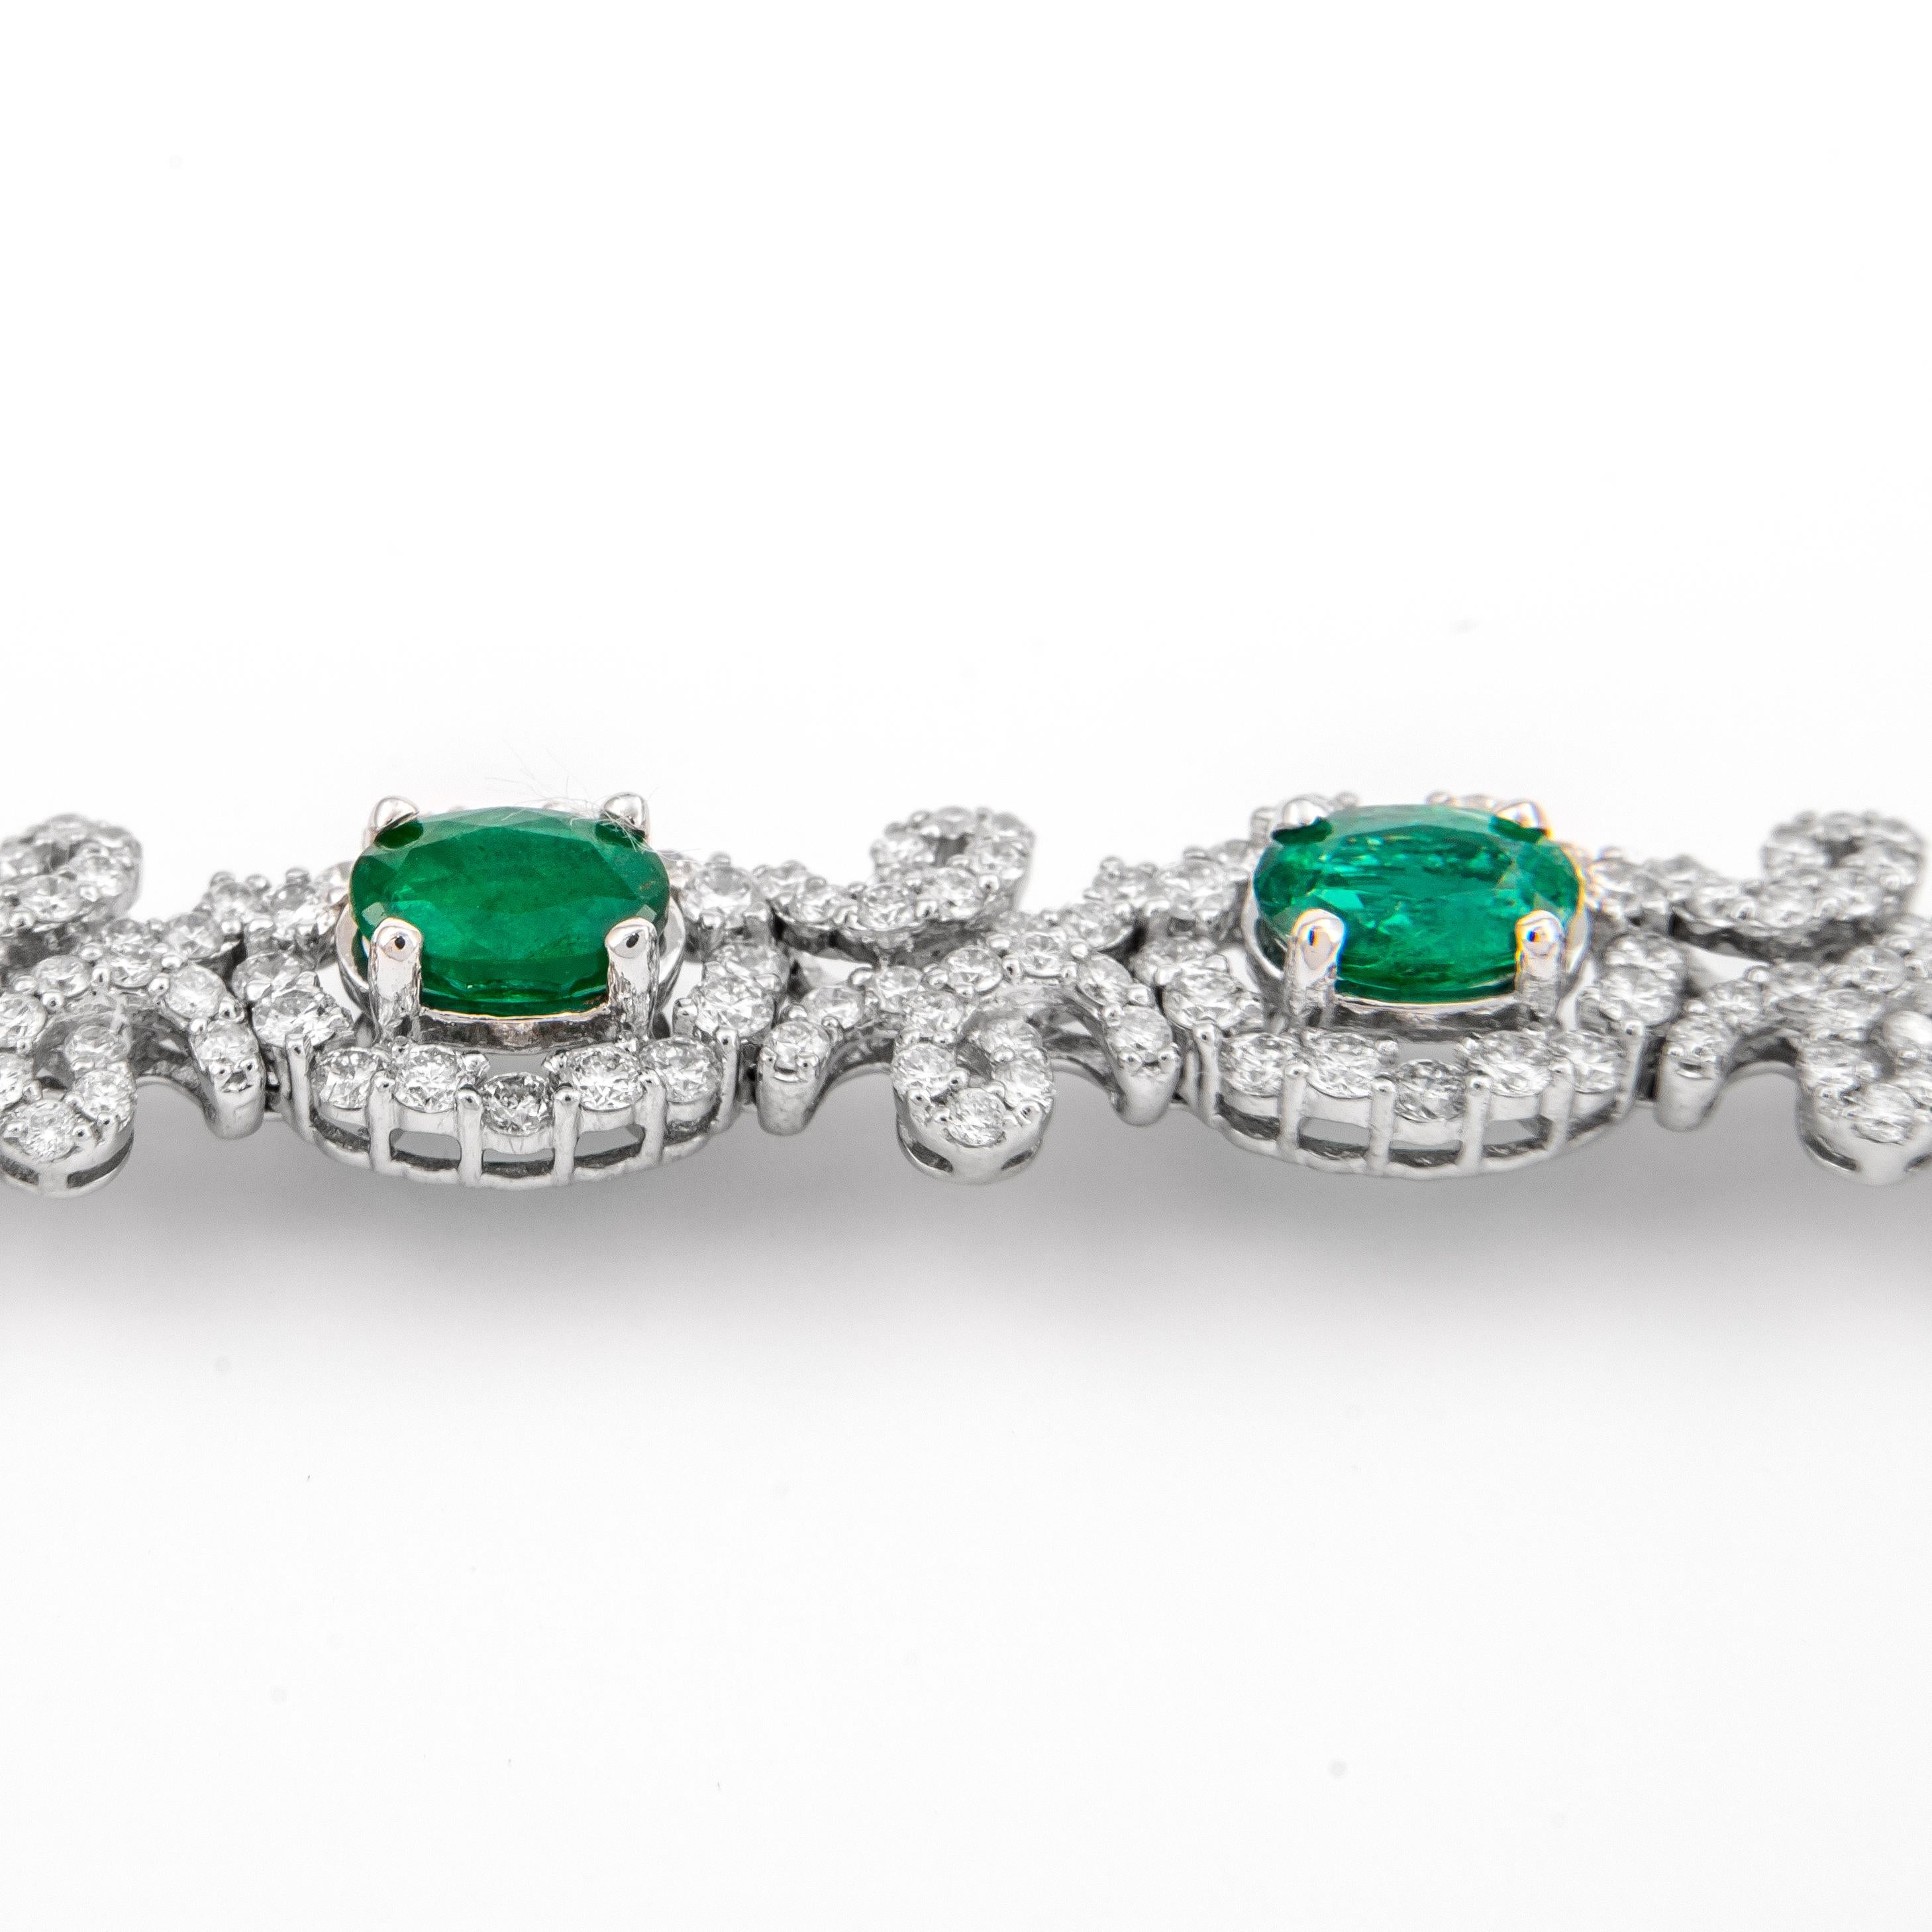 Contemporary 13.22 Carat Emerald & Diamond Bracelet 18k White Gold